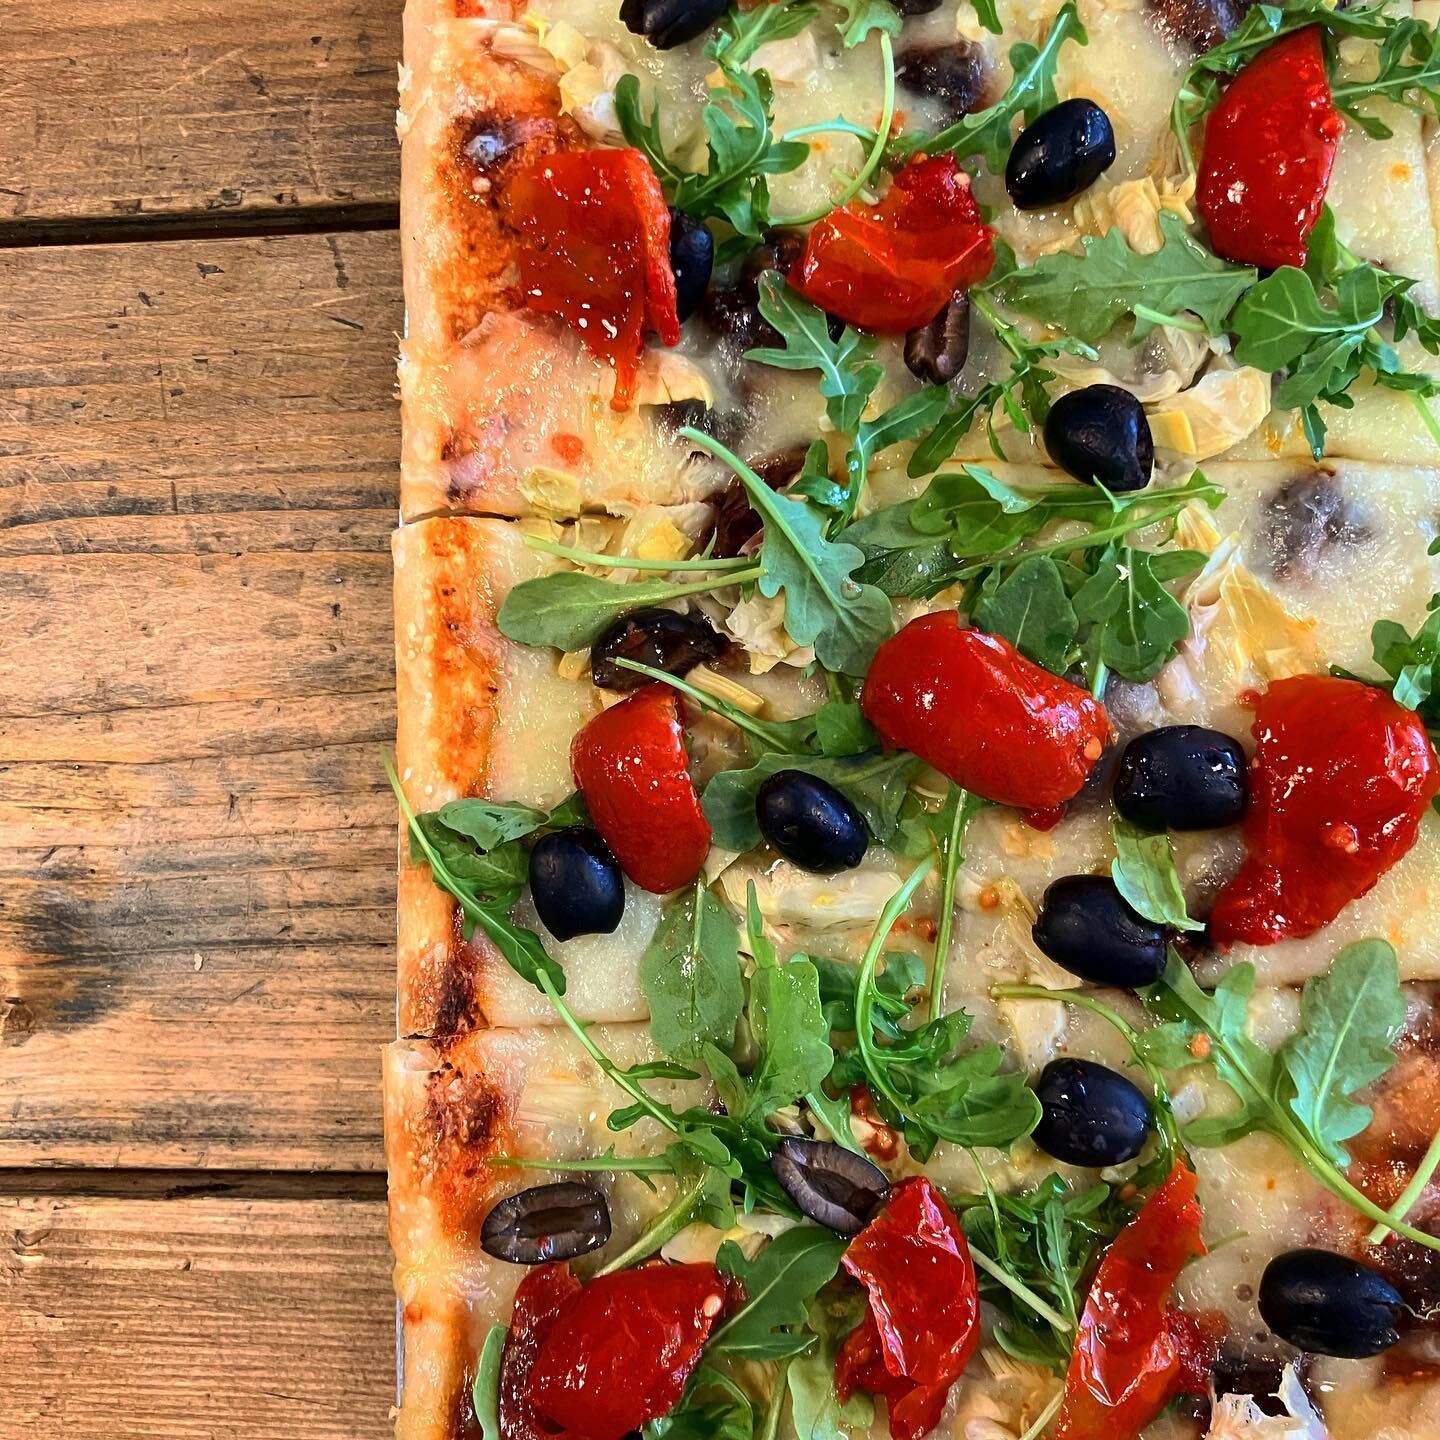 A new summer pizza hit the counter today!☀️

FRESCO
Artichokes 
Sun dried tomatoes 
Black olives 
Rocket 

#theblock #theblockyork #pizza #york #indieyork #yorkfood #visityork